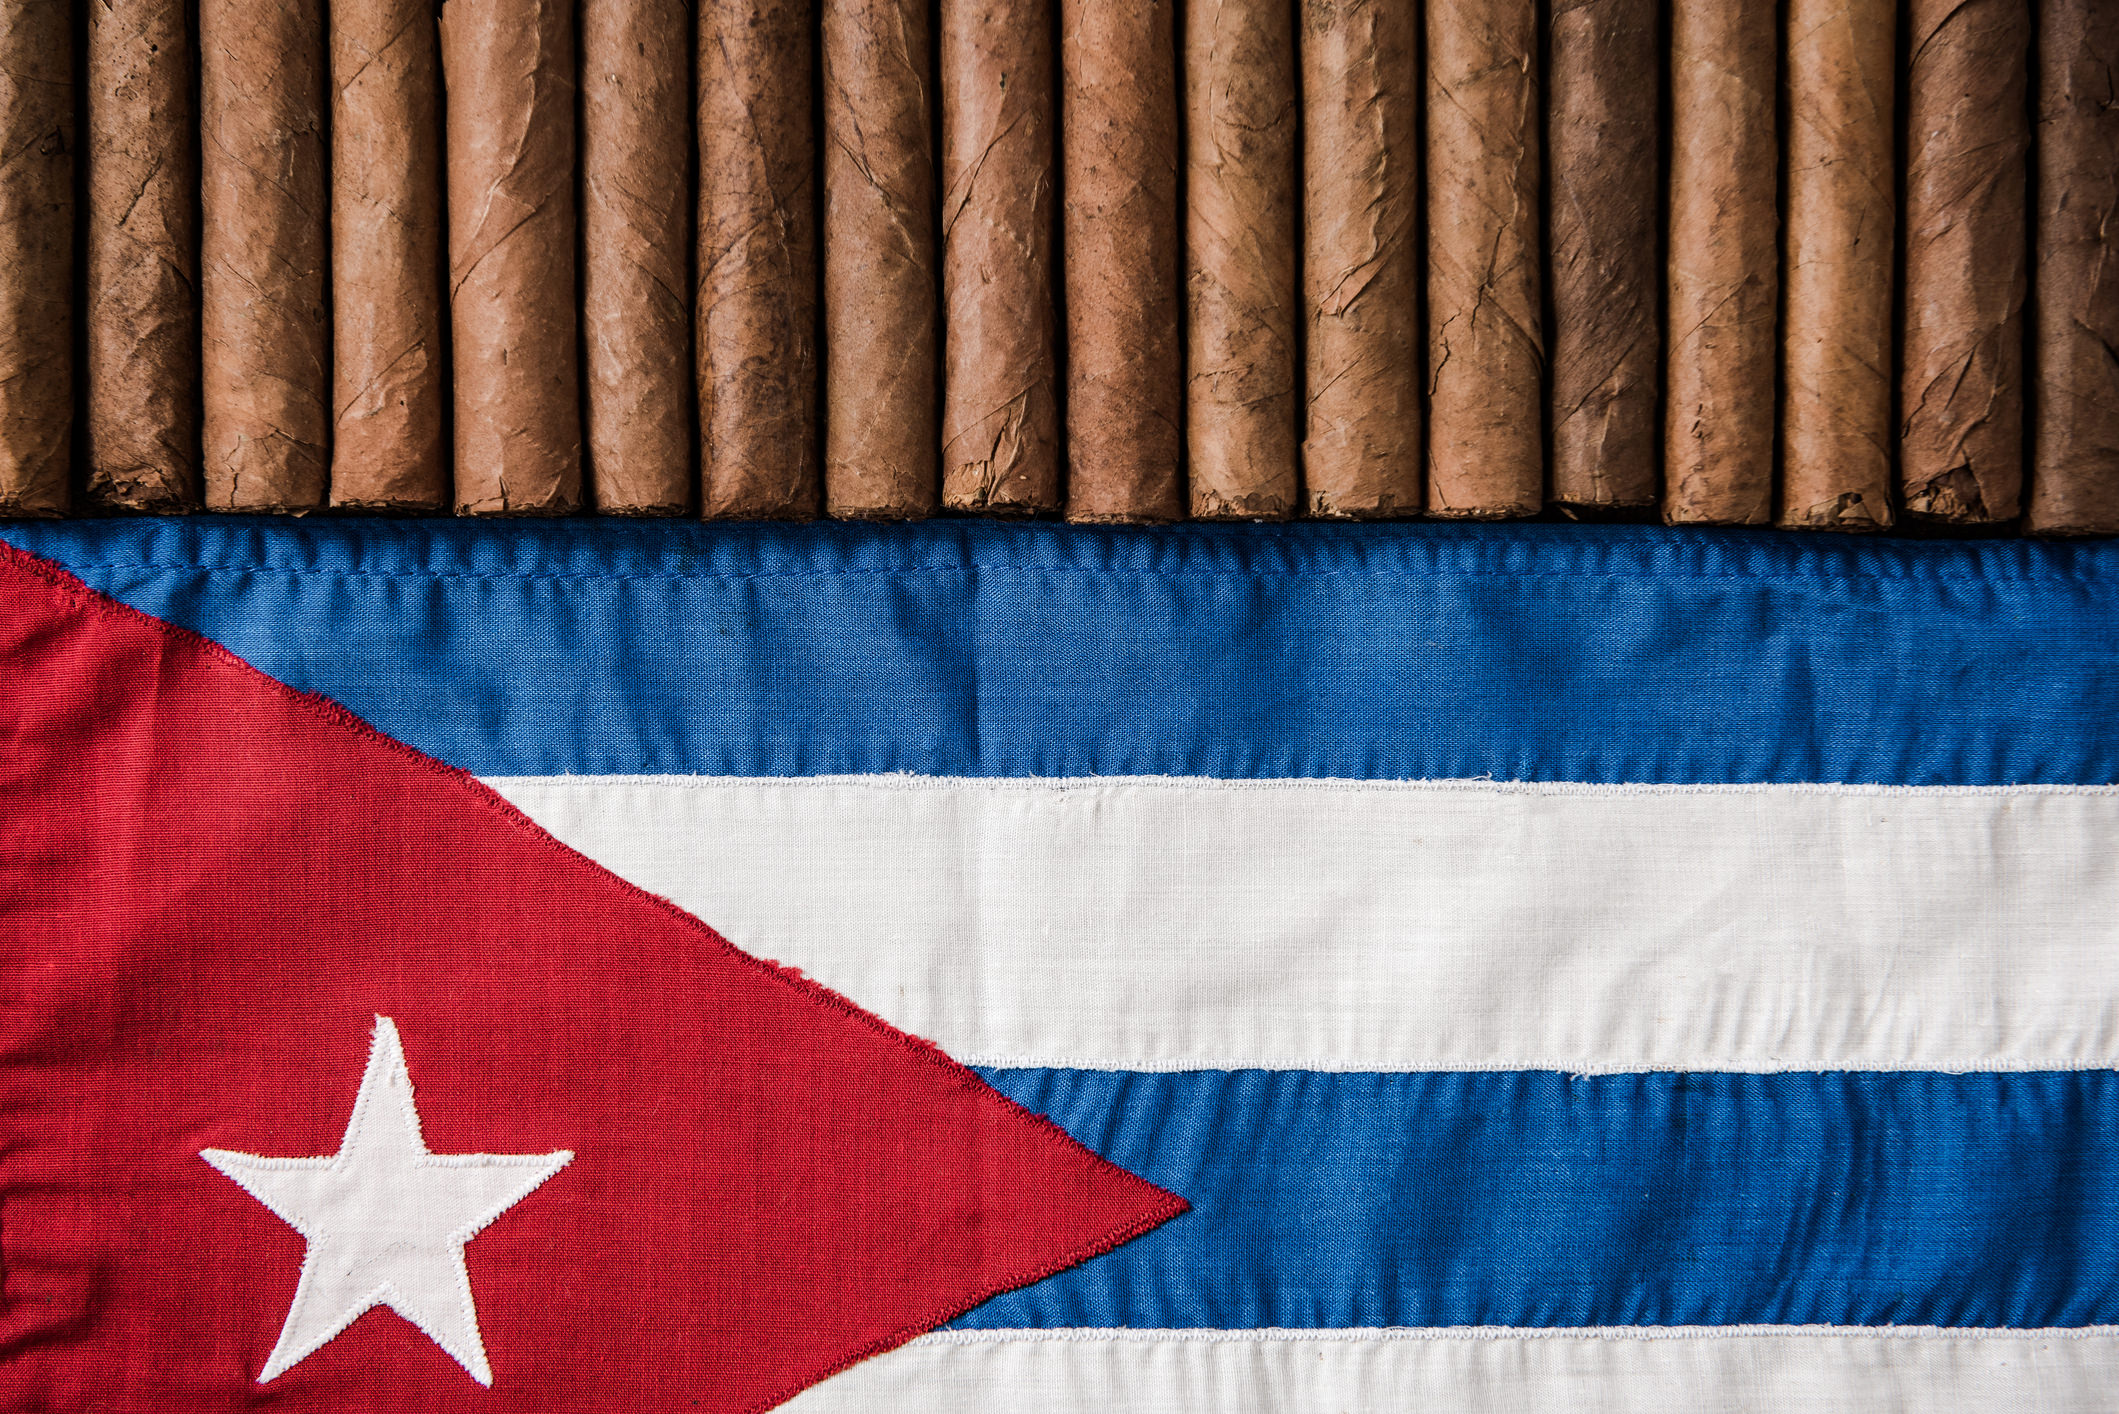 Cuban Cigars and Cuban Flag,